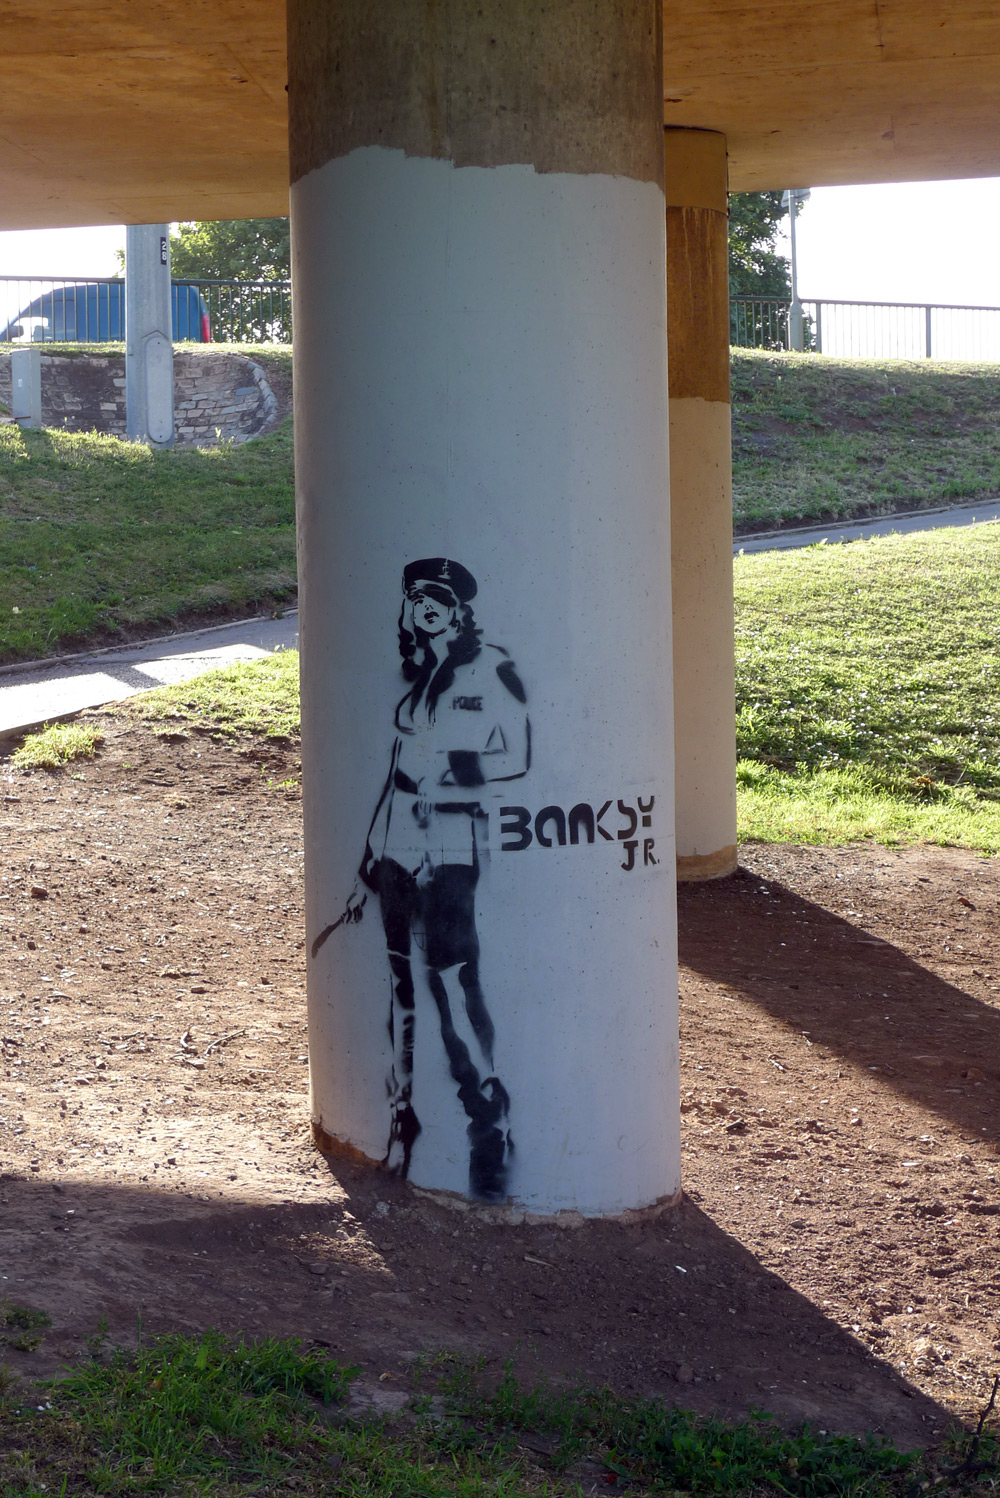 Graffiti - Banksy Jr, Ashton Underpass, Bristol